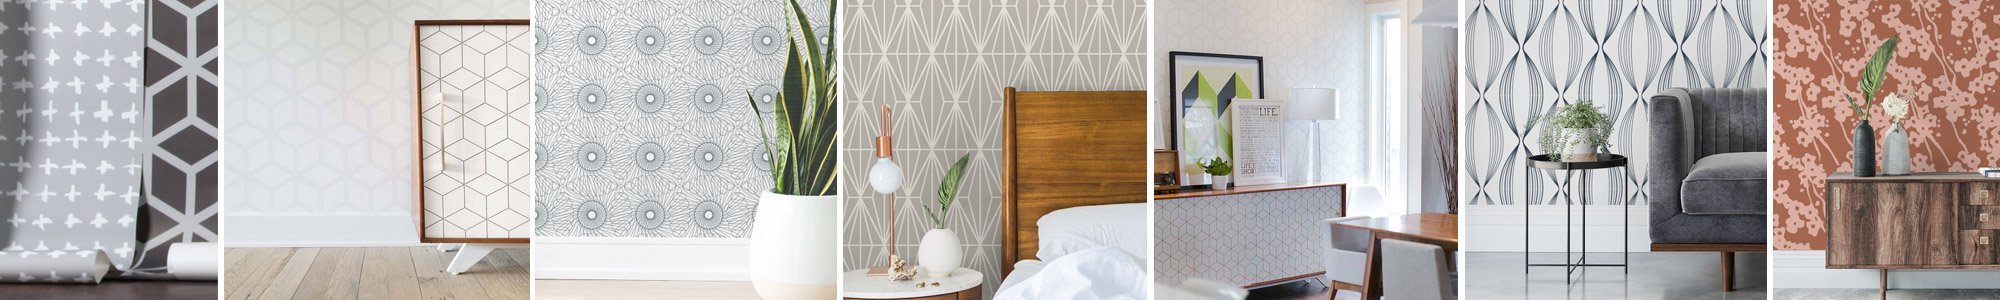 Customizable Wallpaper | Modern Wallpaper | Peel and Stick Wallpaper | Commercial Wallpaper | Inhabit